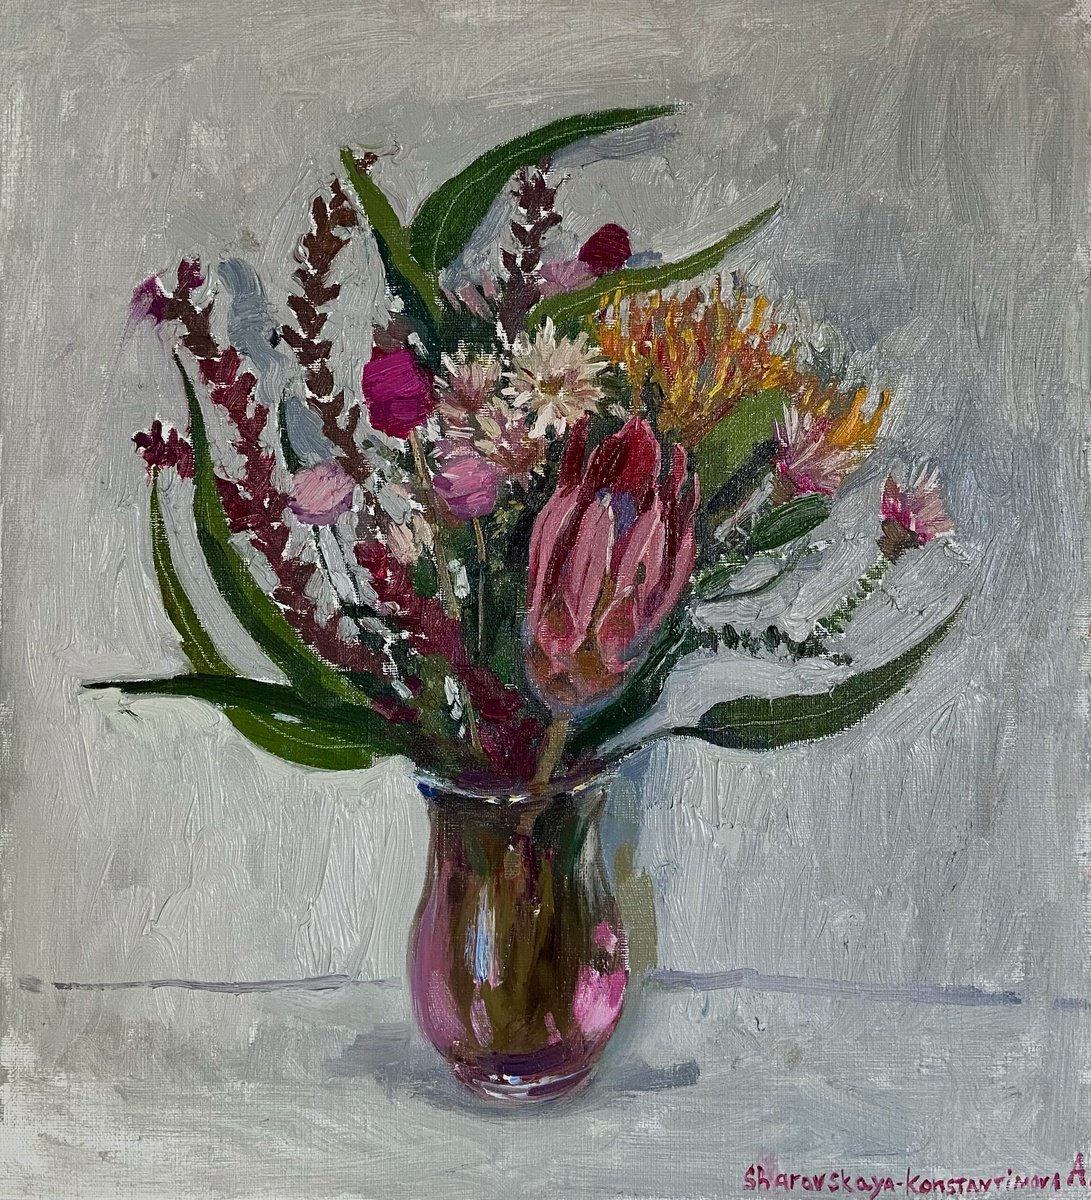 Flowers by Alina Sharovskaya-Konstantinova